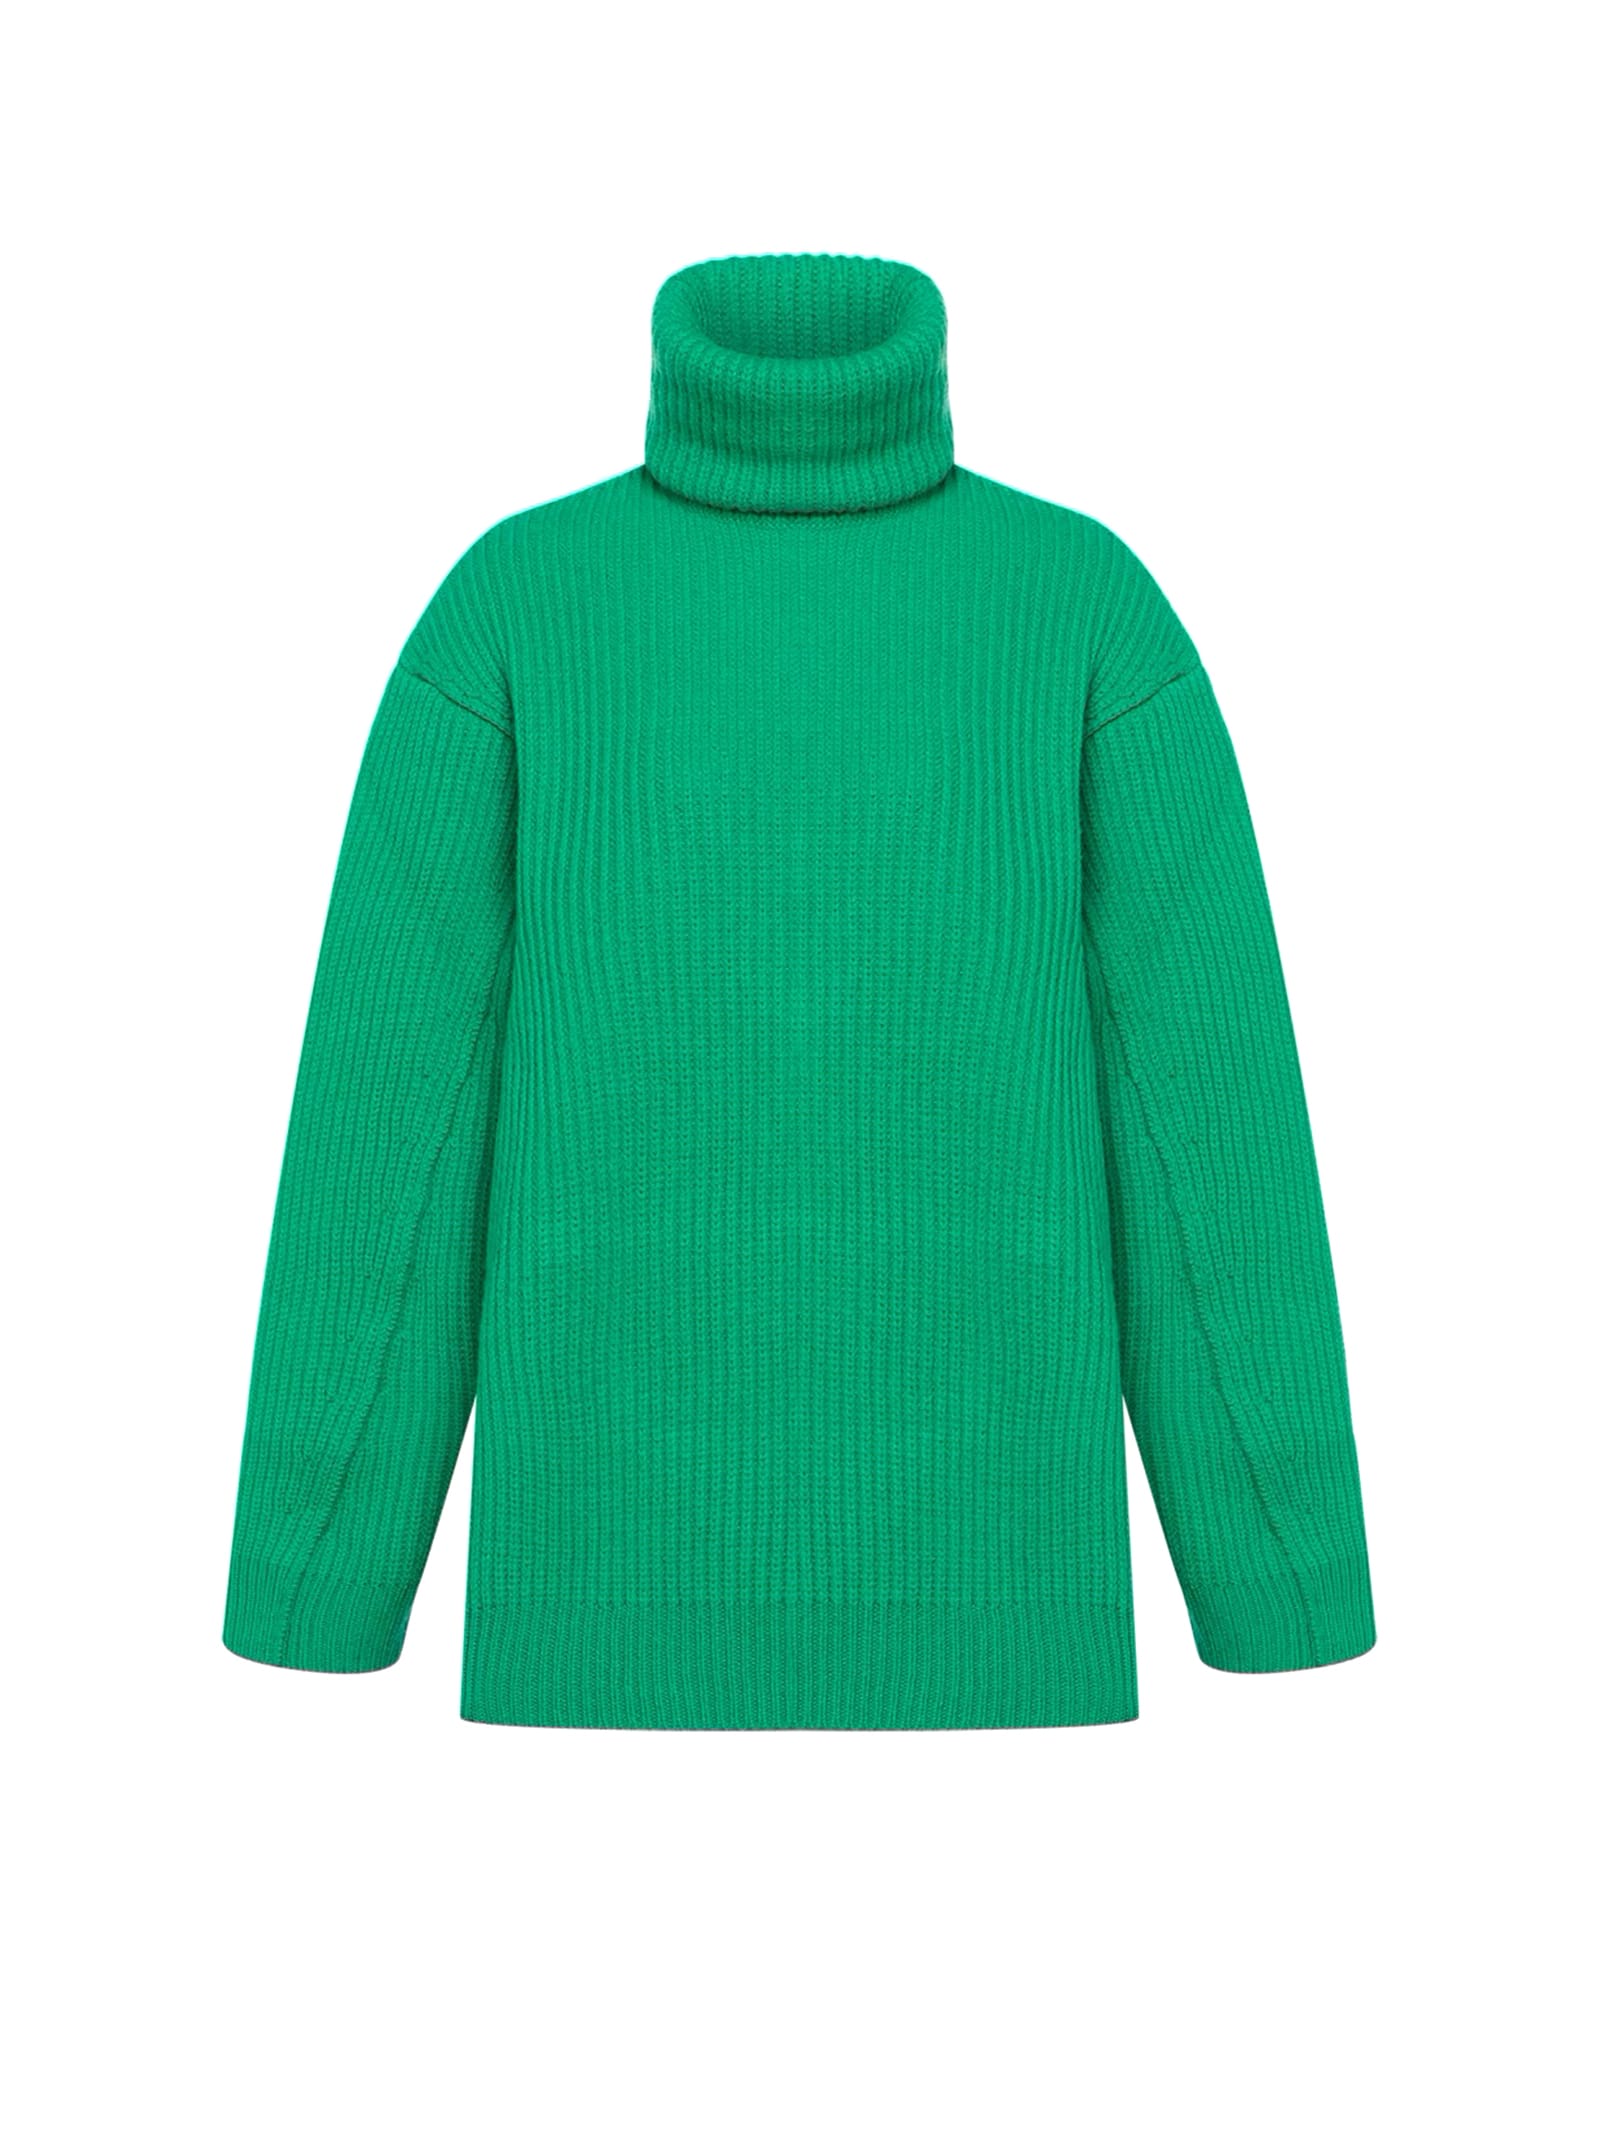 Philosophy di Lorenzo Serafini Oversized Sweater